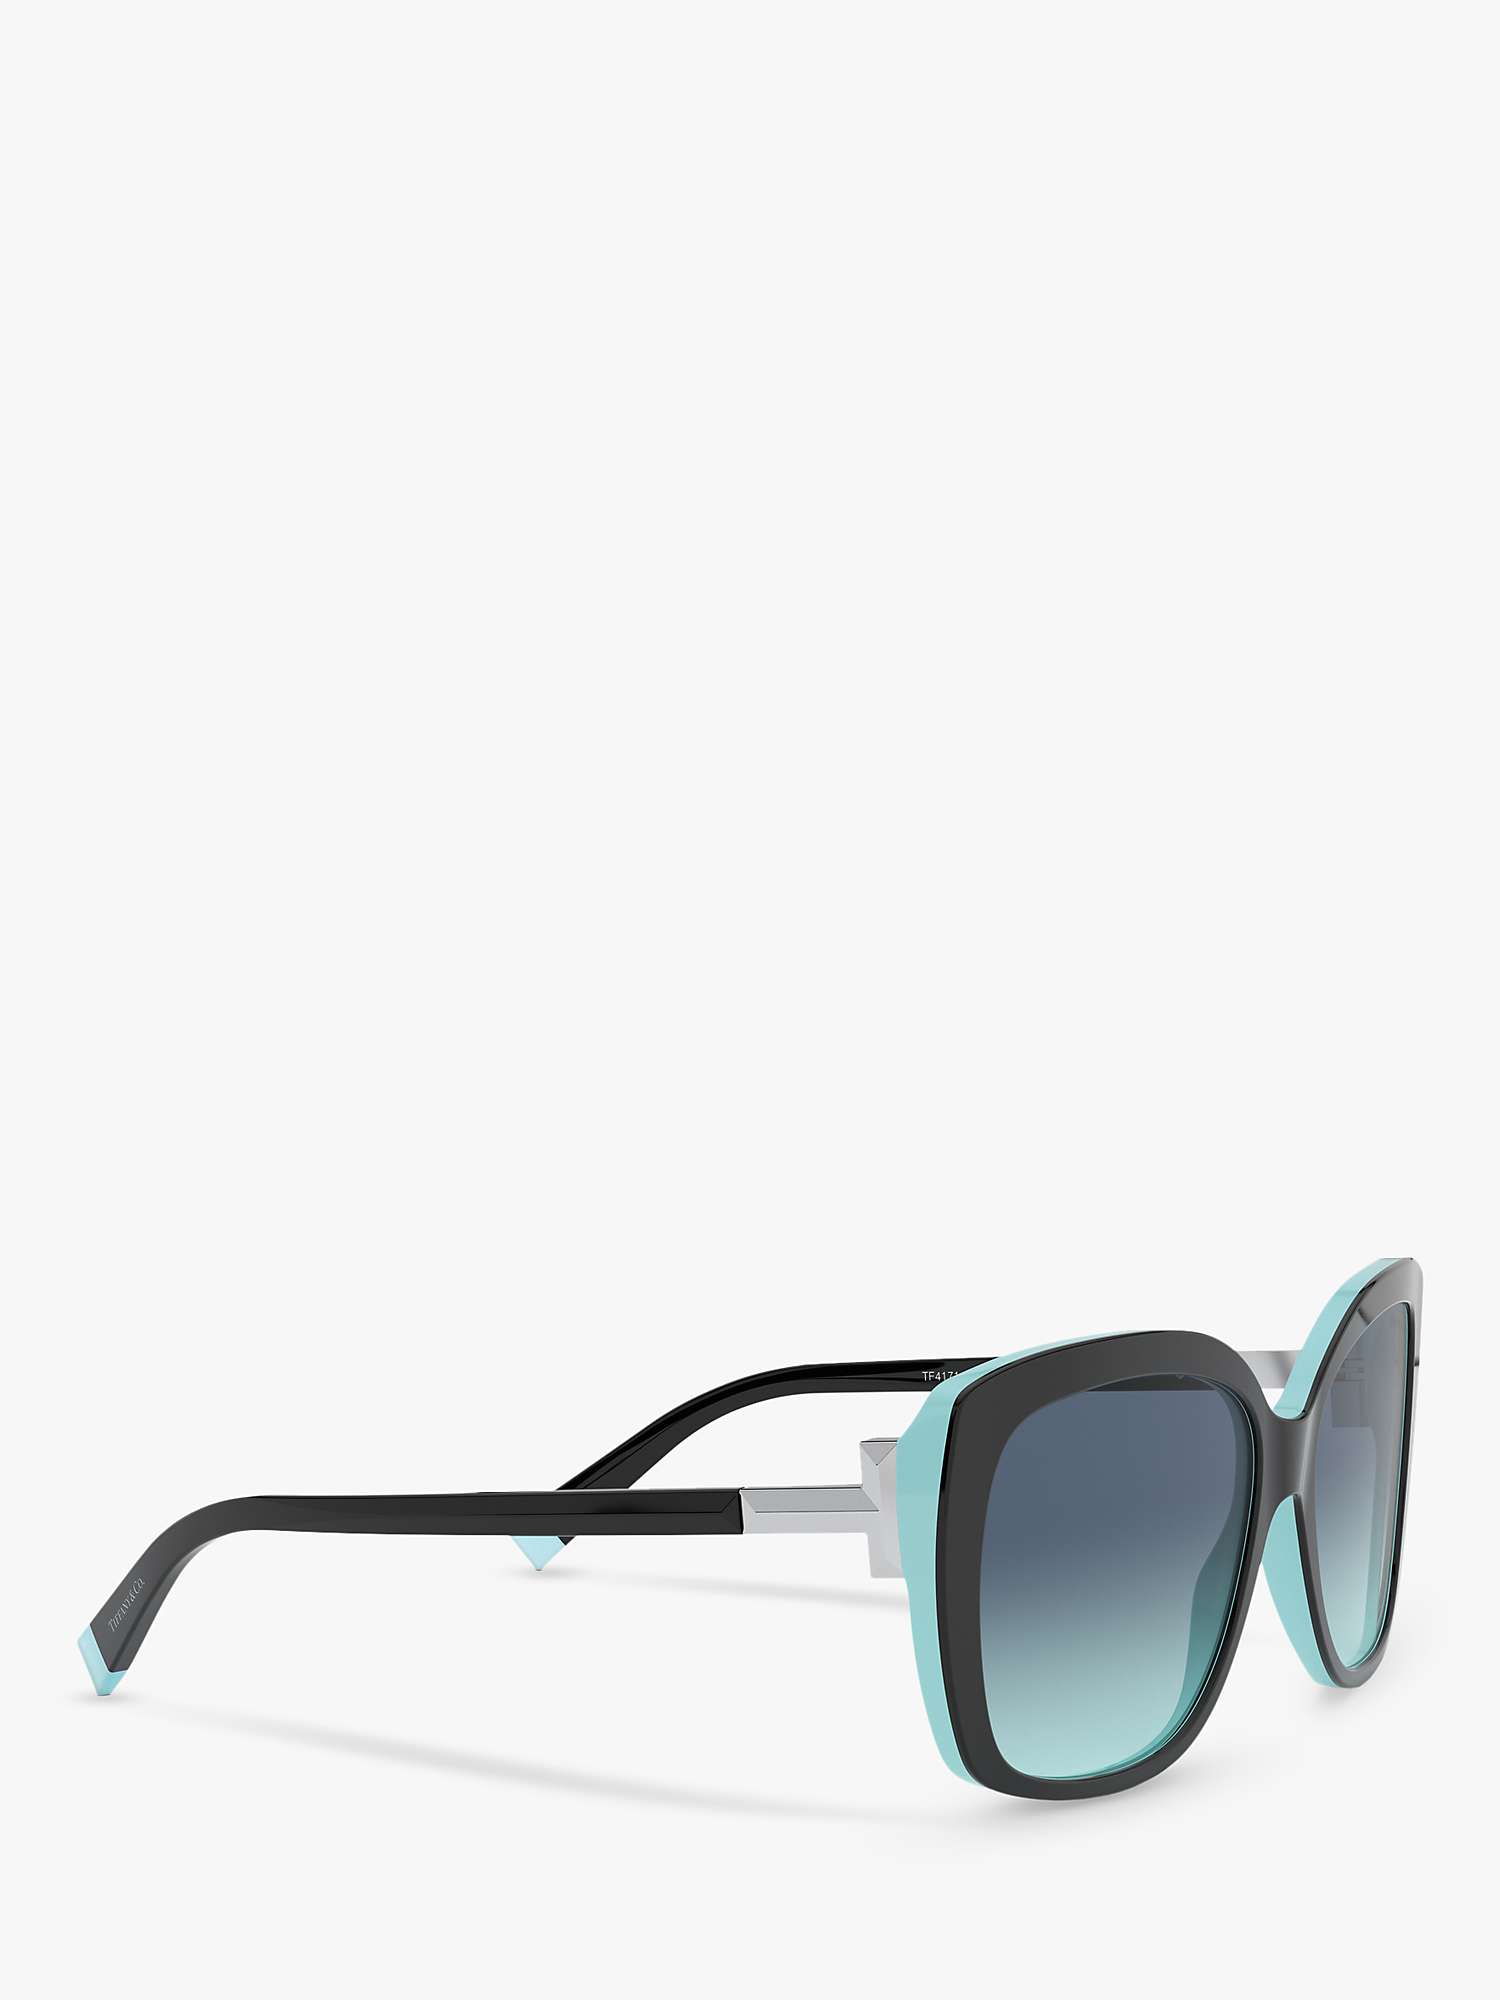 Buy Tiffany & Co TF4171 Women's Square Sunglasses, Aqua Blue Online at johnlewis.com